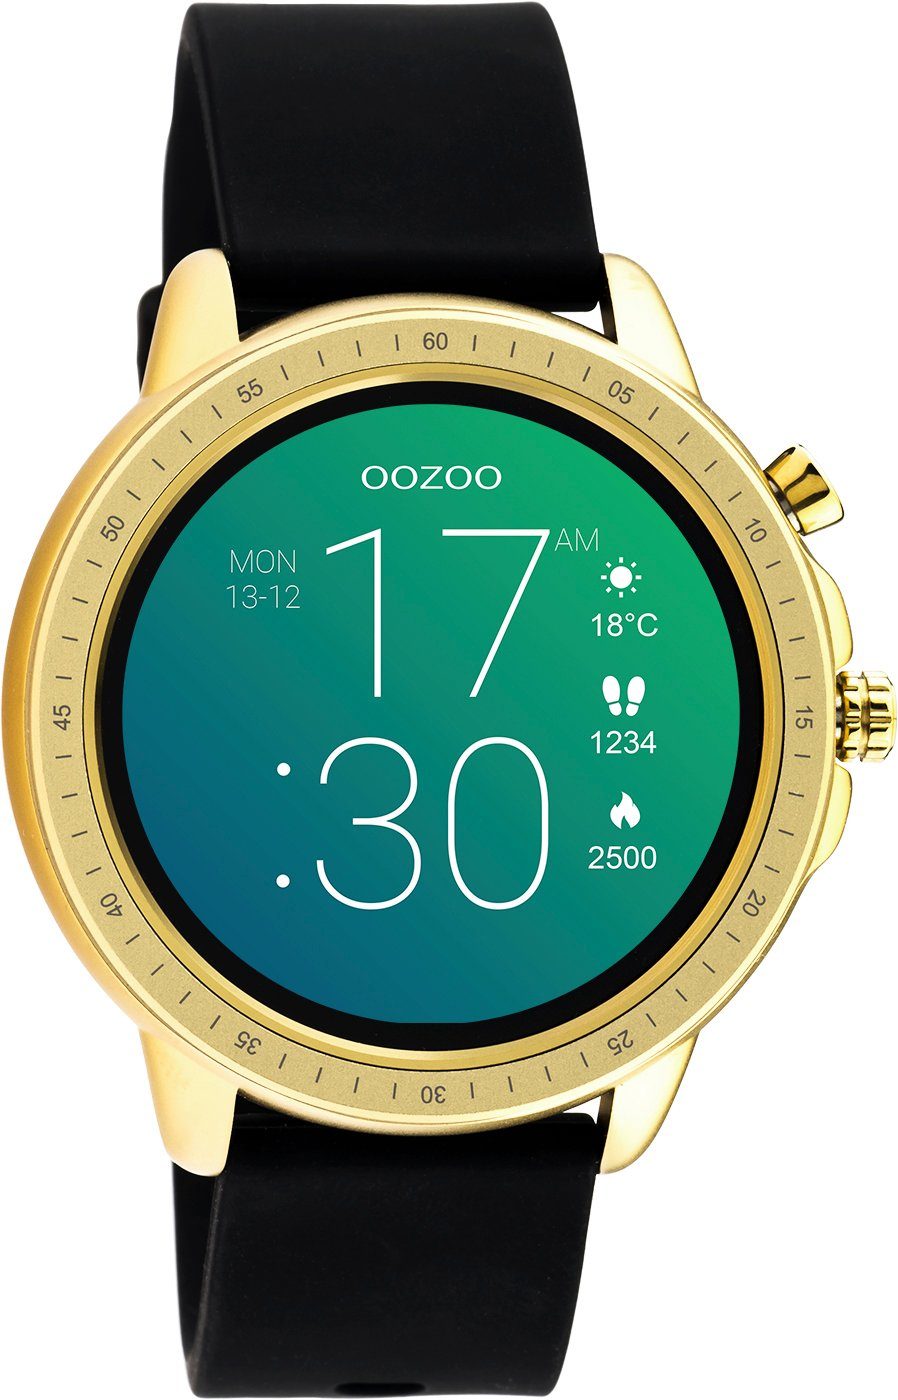 OOZOO Q00301 Armbanduhr Goldfarben Silikonband Schwarz 45 mm Smartwatch